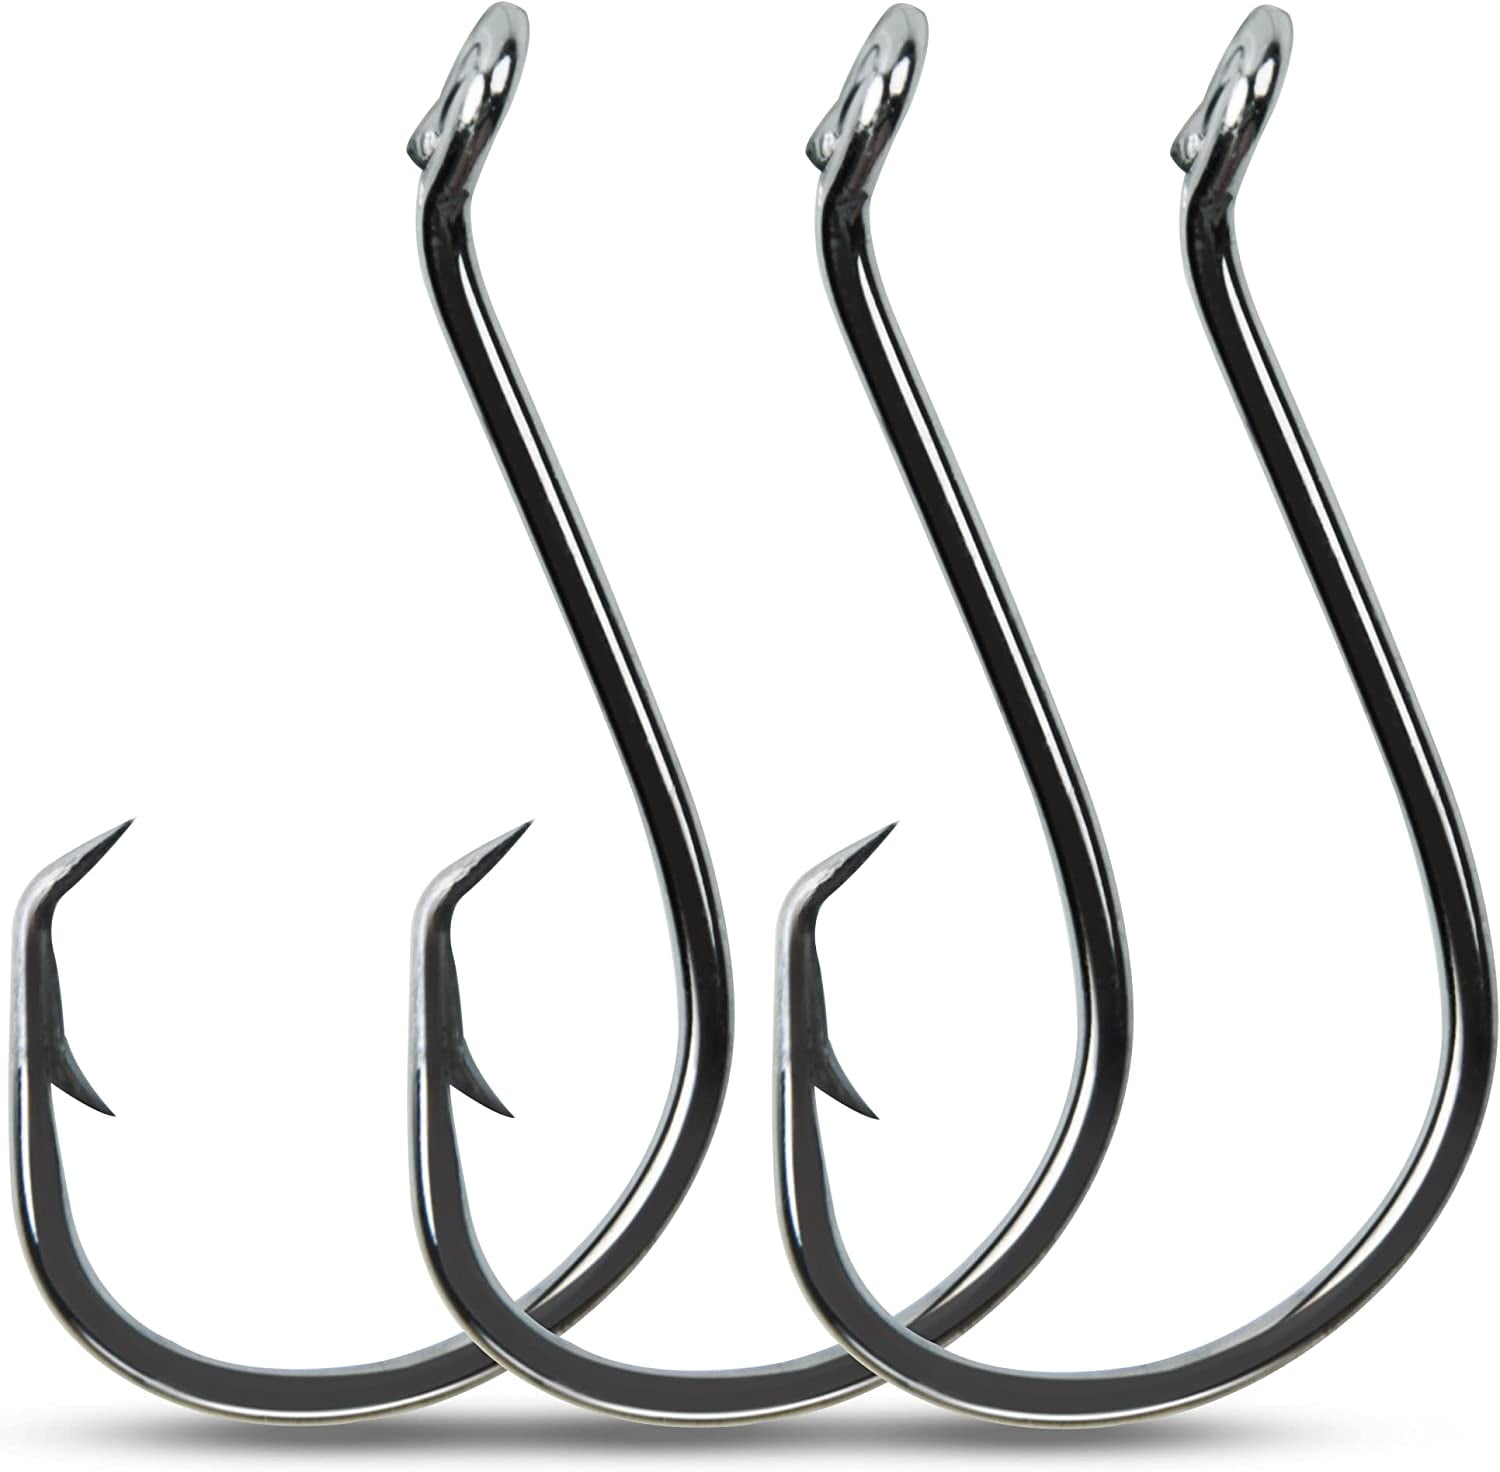  Team Catfish 3/0 Octopus Circle Hooks (7 Pack) Offset Hook with  Wide Gap, Heavy Duty 80-Carbon Steel : 運動和戶外活動